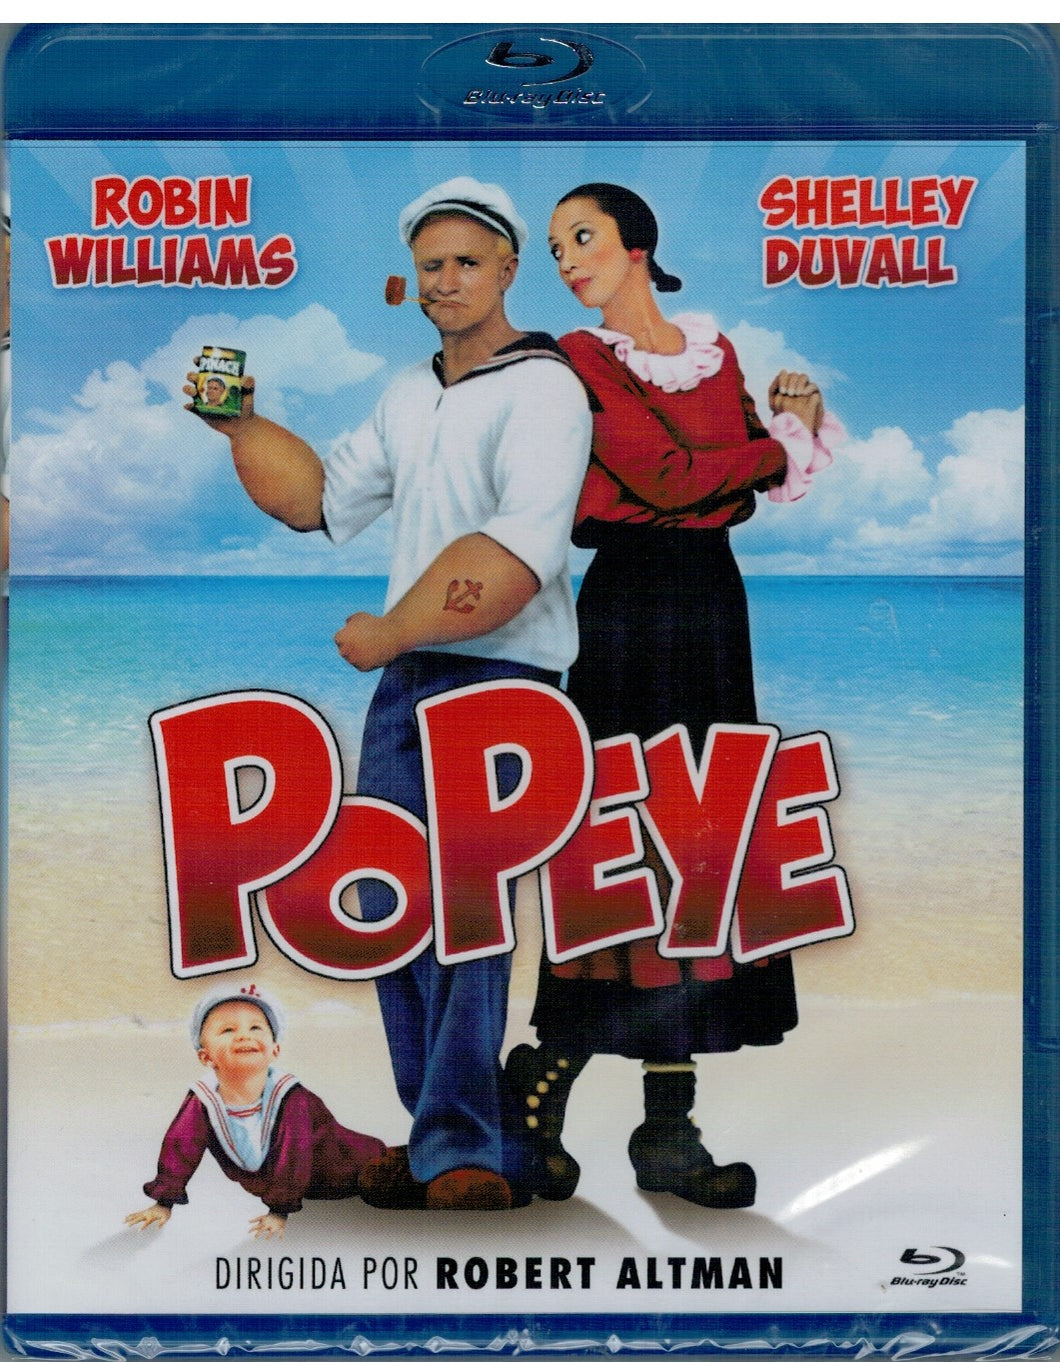 Popeye (Bluray Nuevo)